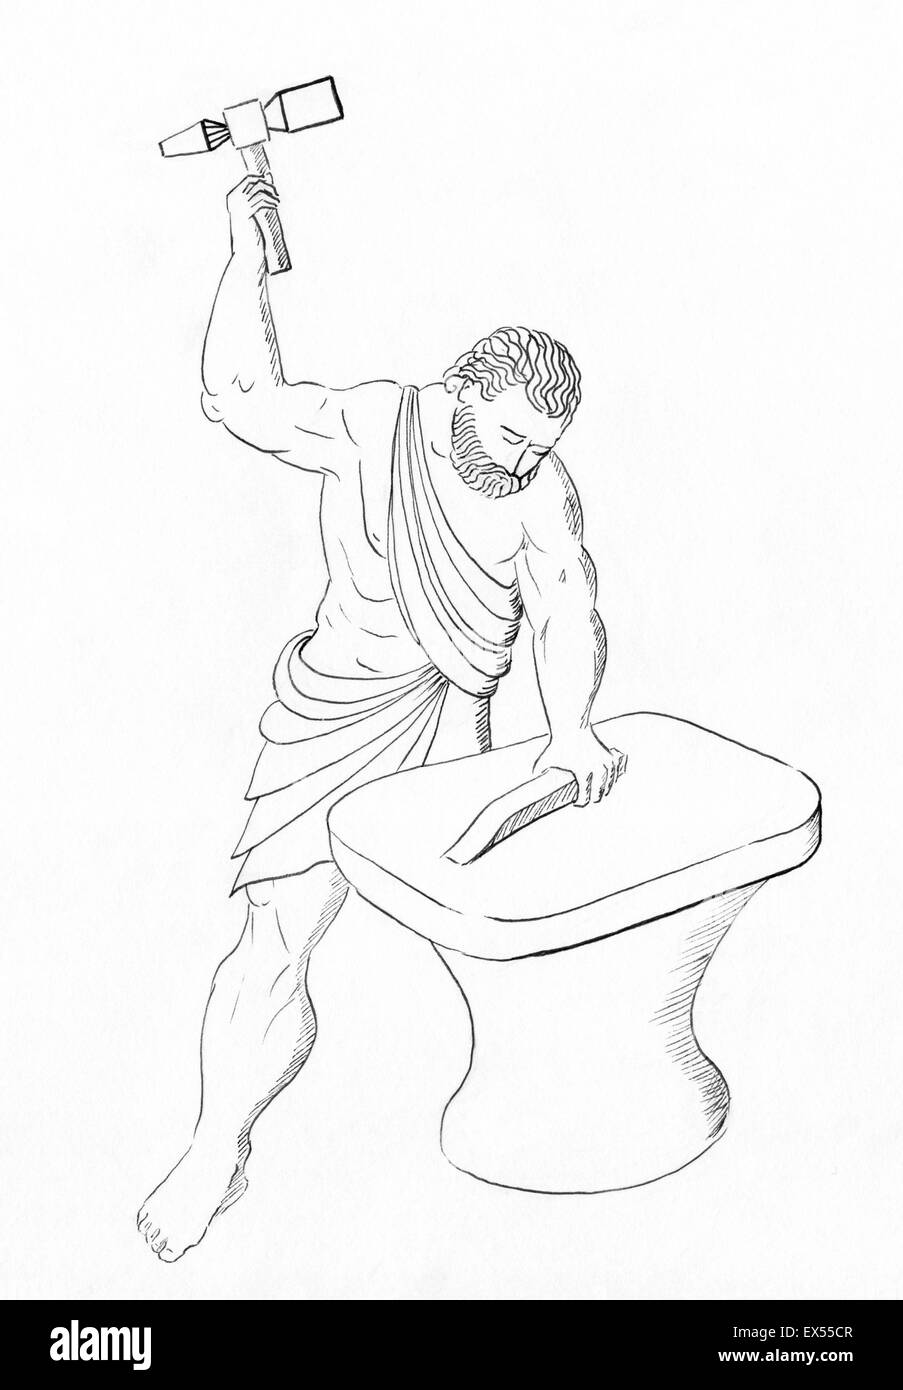 Line drawing of Hephaestus, Vulcan, greek roman god of fire. Stock Photo